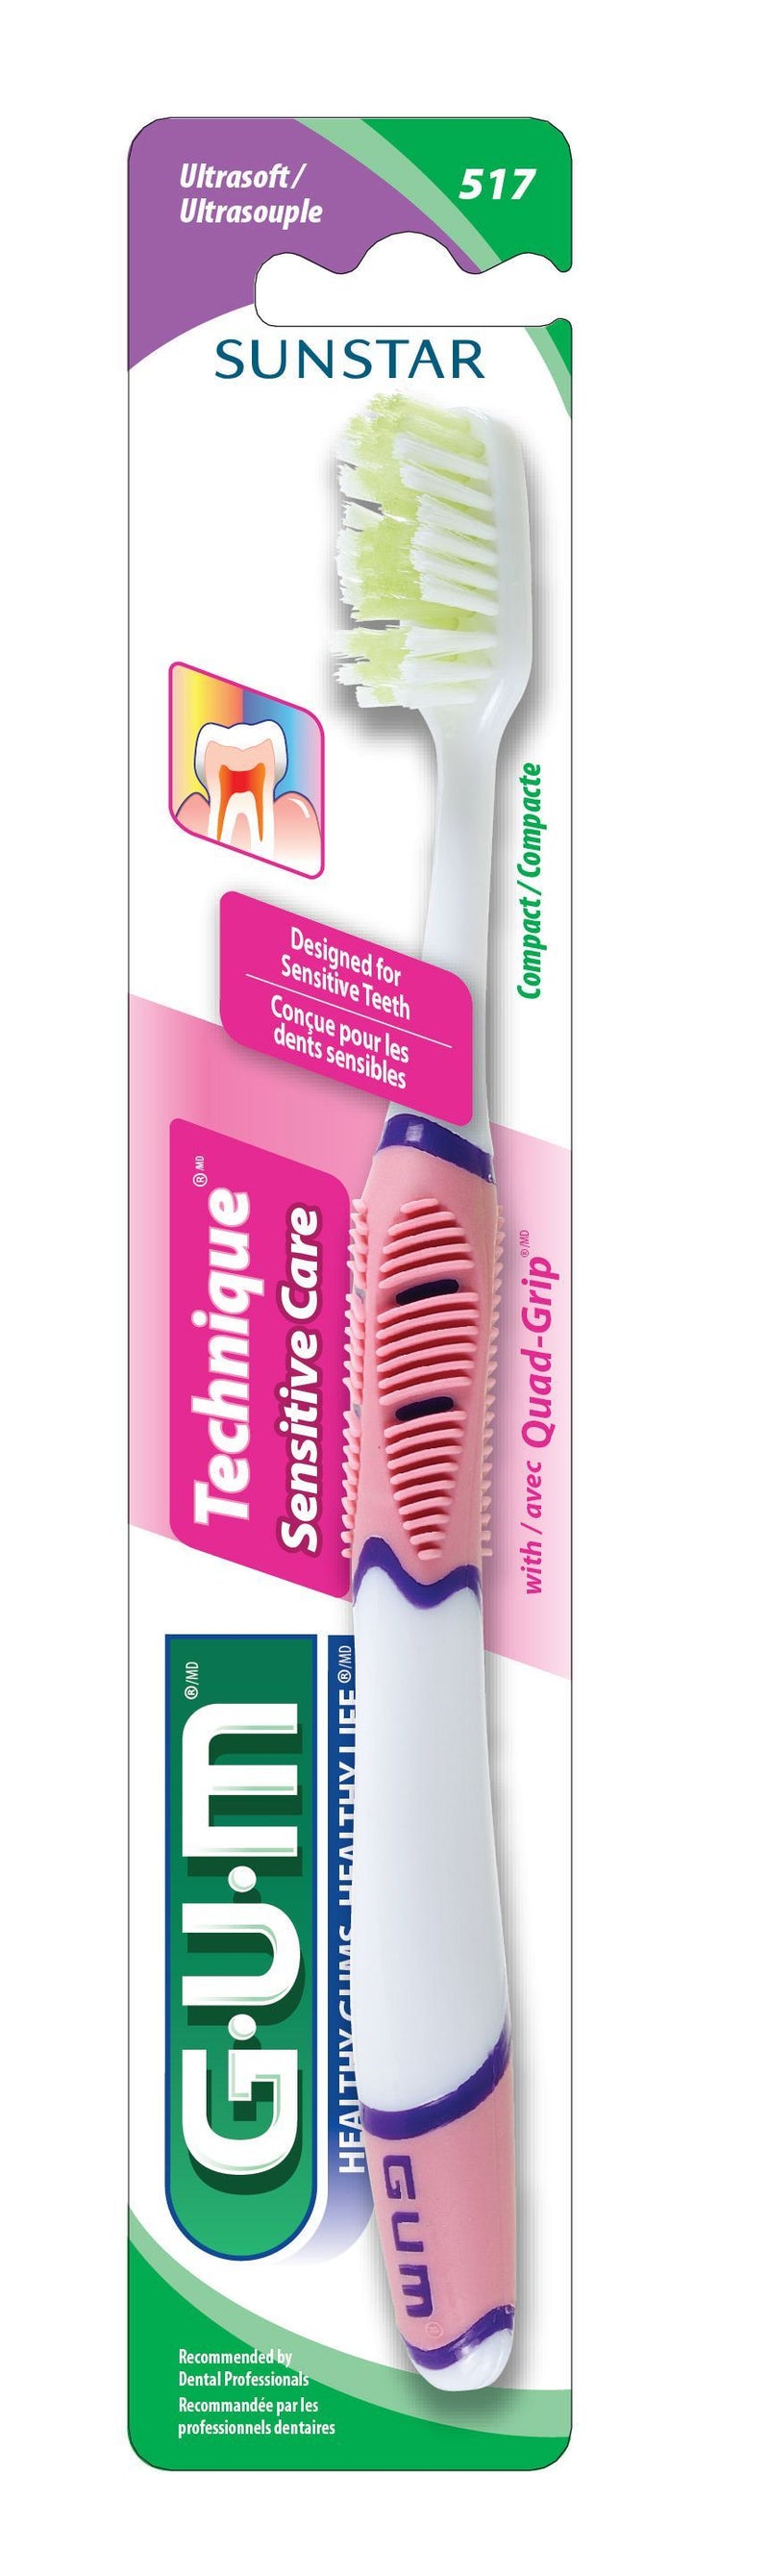 GUM Technique Sensitive Care Toothbrush Soft